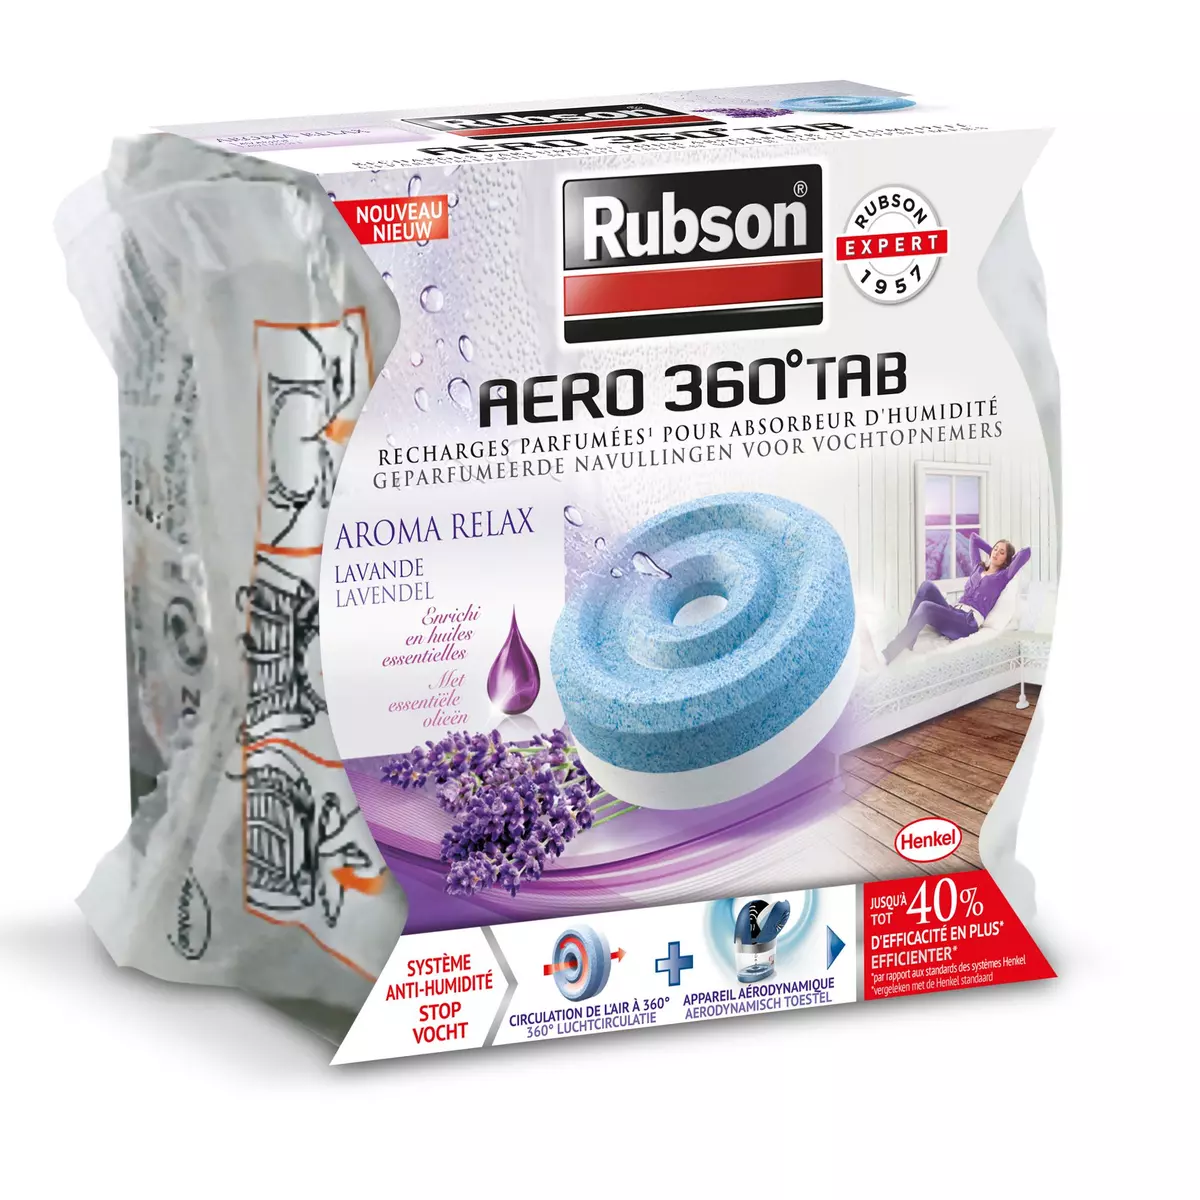 RUBSON Recharge AERO 360 Aroma Relax Lavande